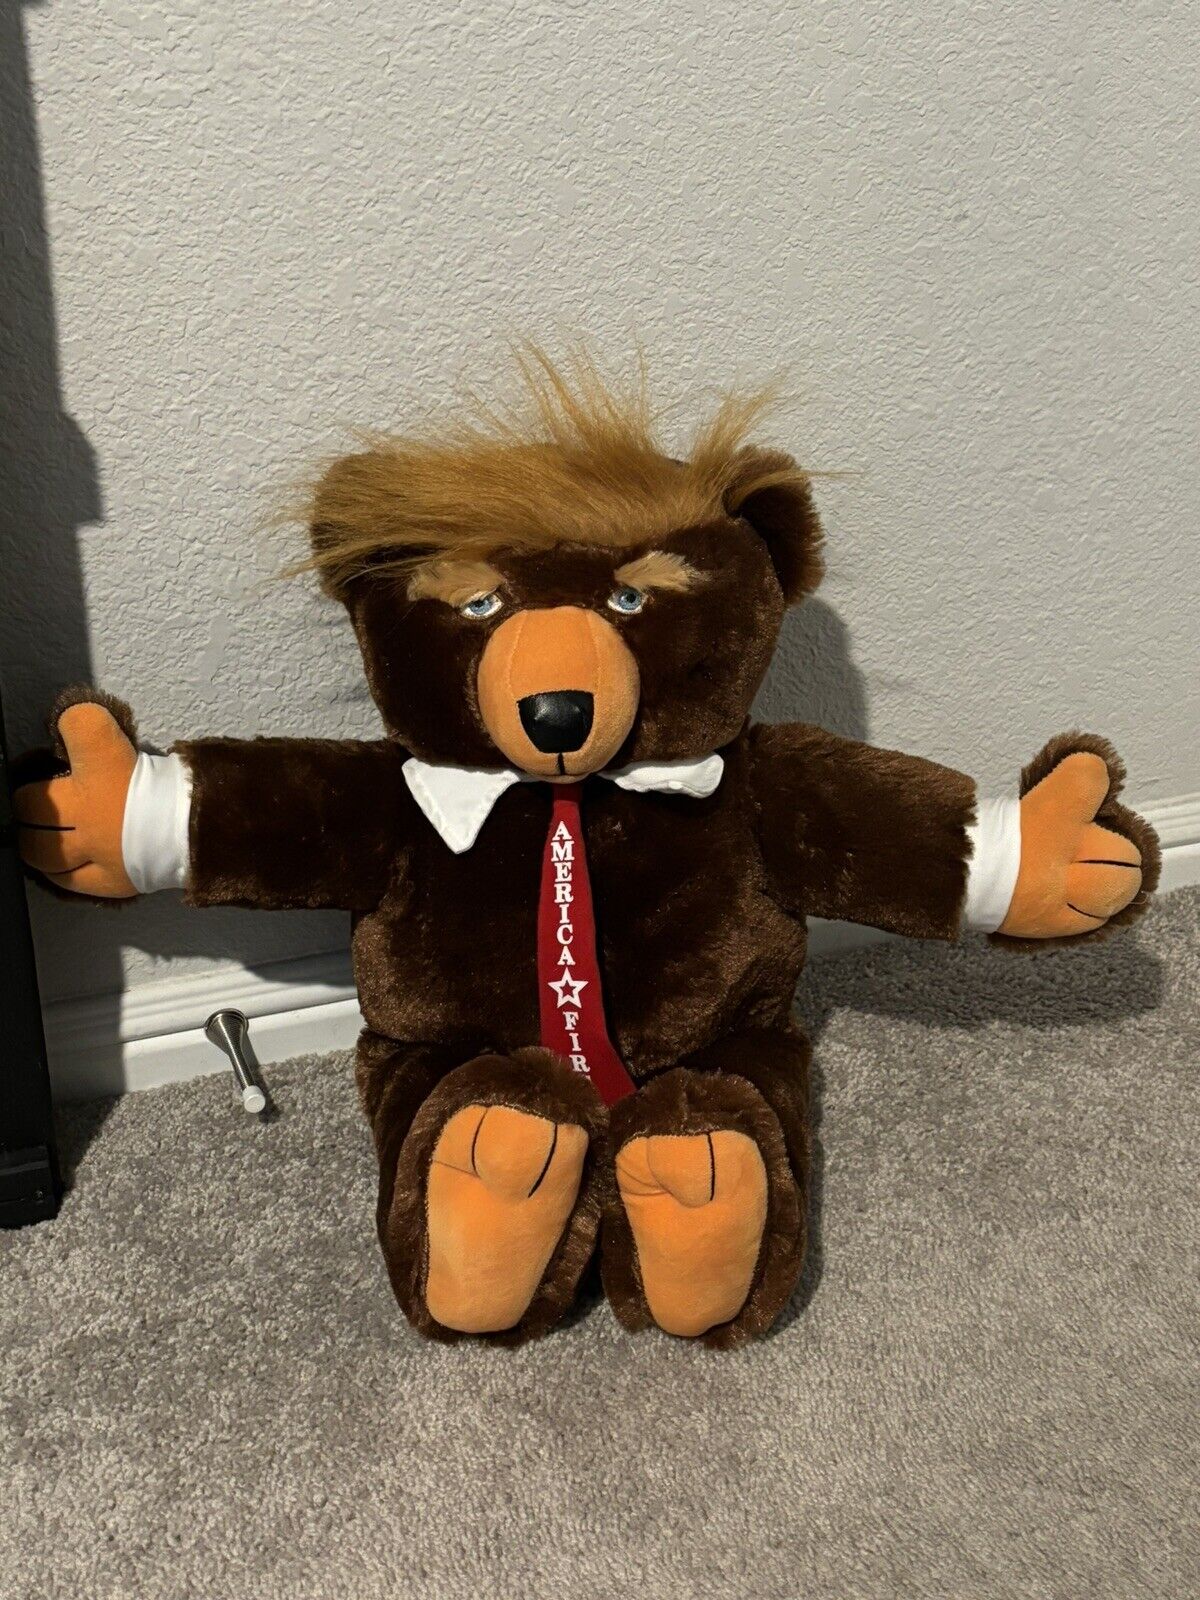 TRUMPY BEAR Deluxe 22” Donald Trump Teddy Bear Plush With American Flag Cape (2)